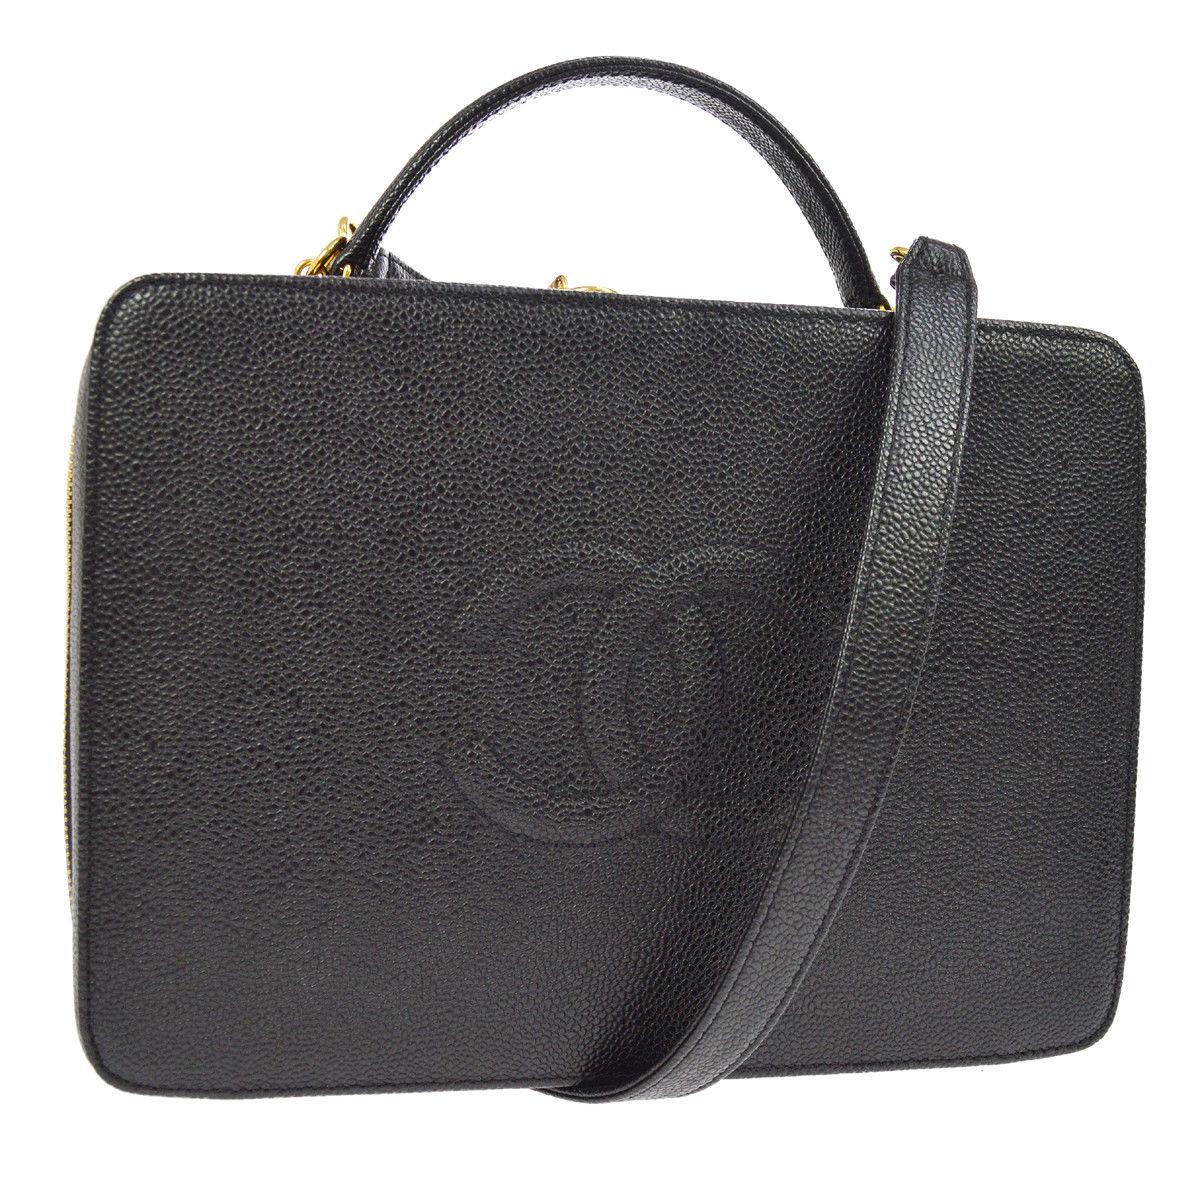 Chanel Black Top Handle Satchel Travel Vanity Cosmetic Carryall Shoulder Bag